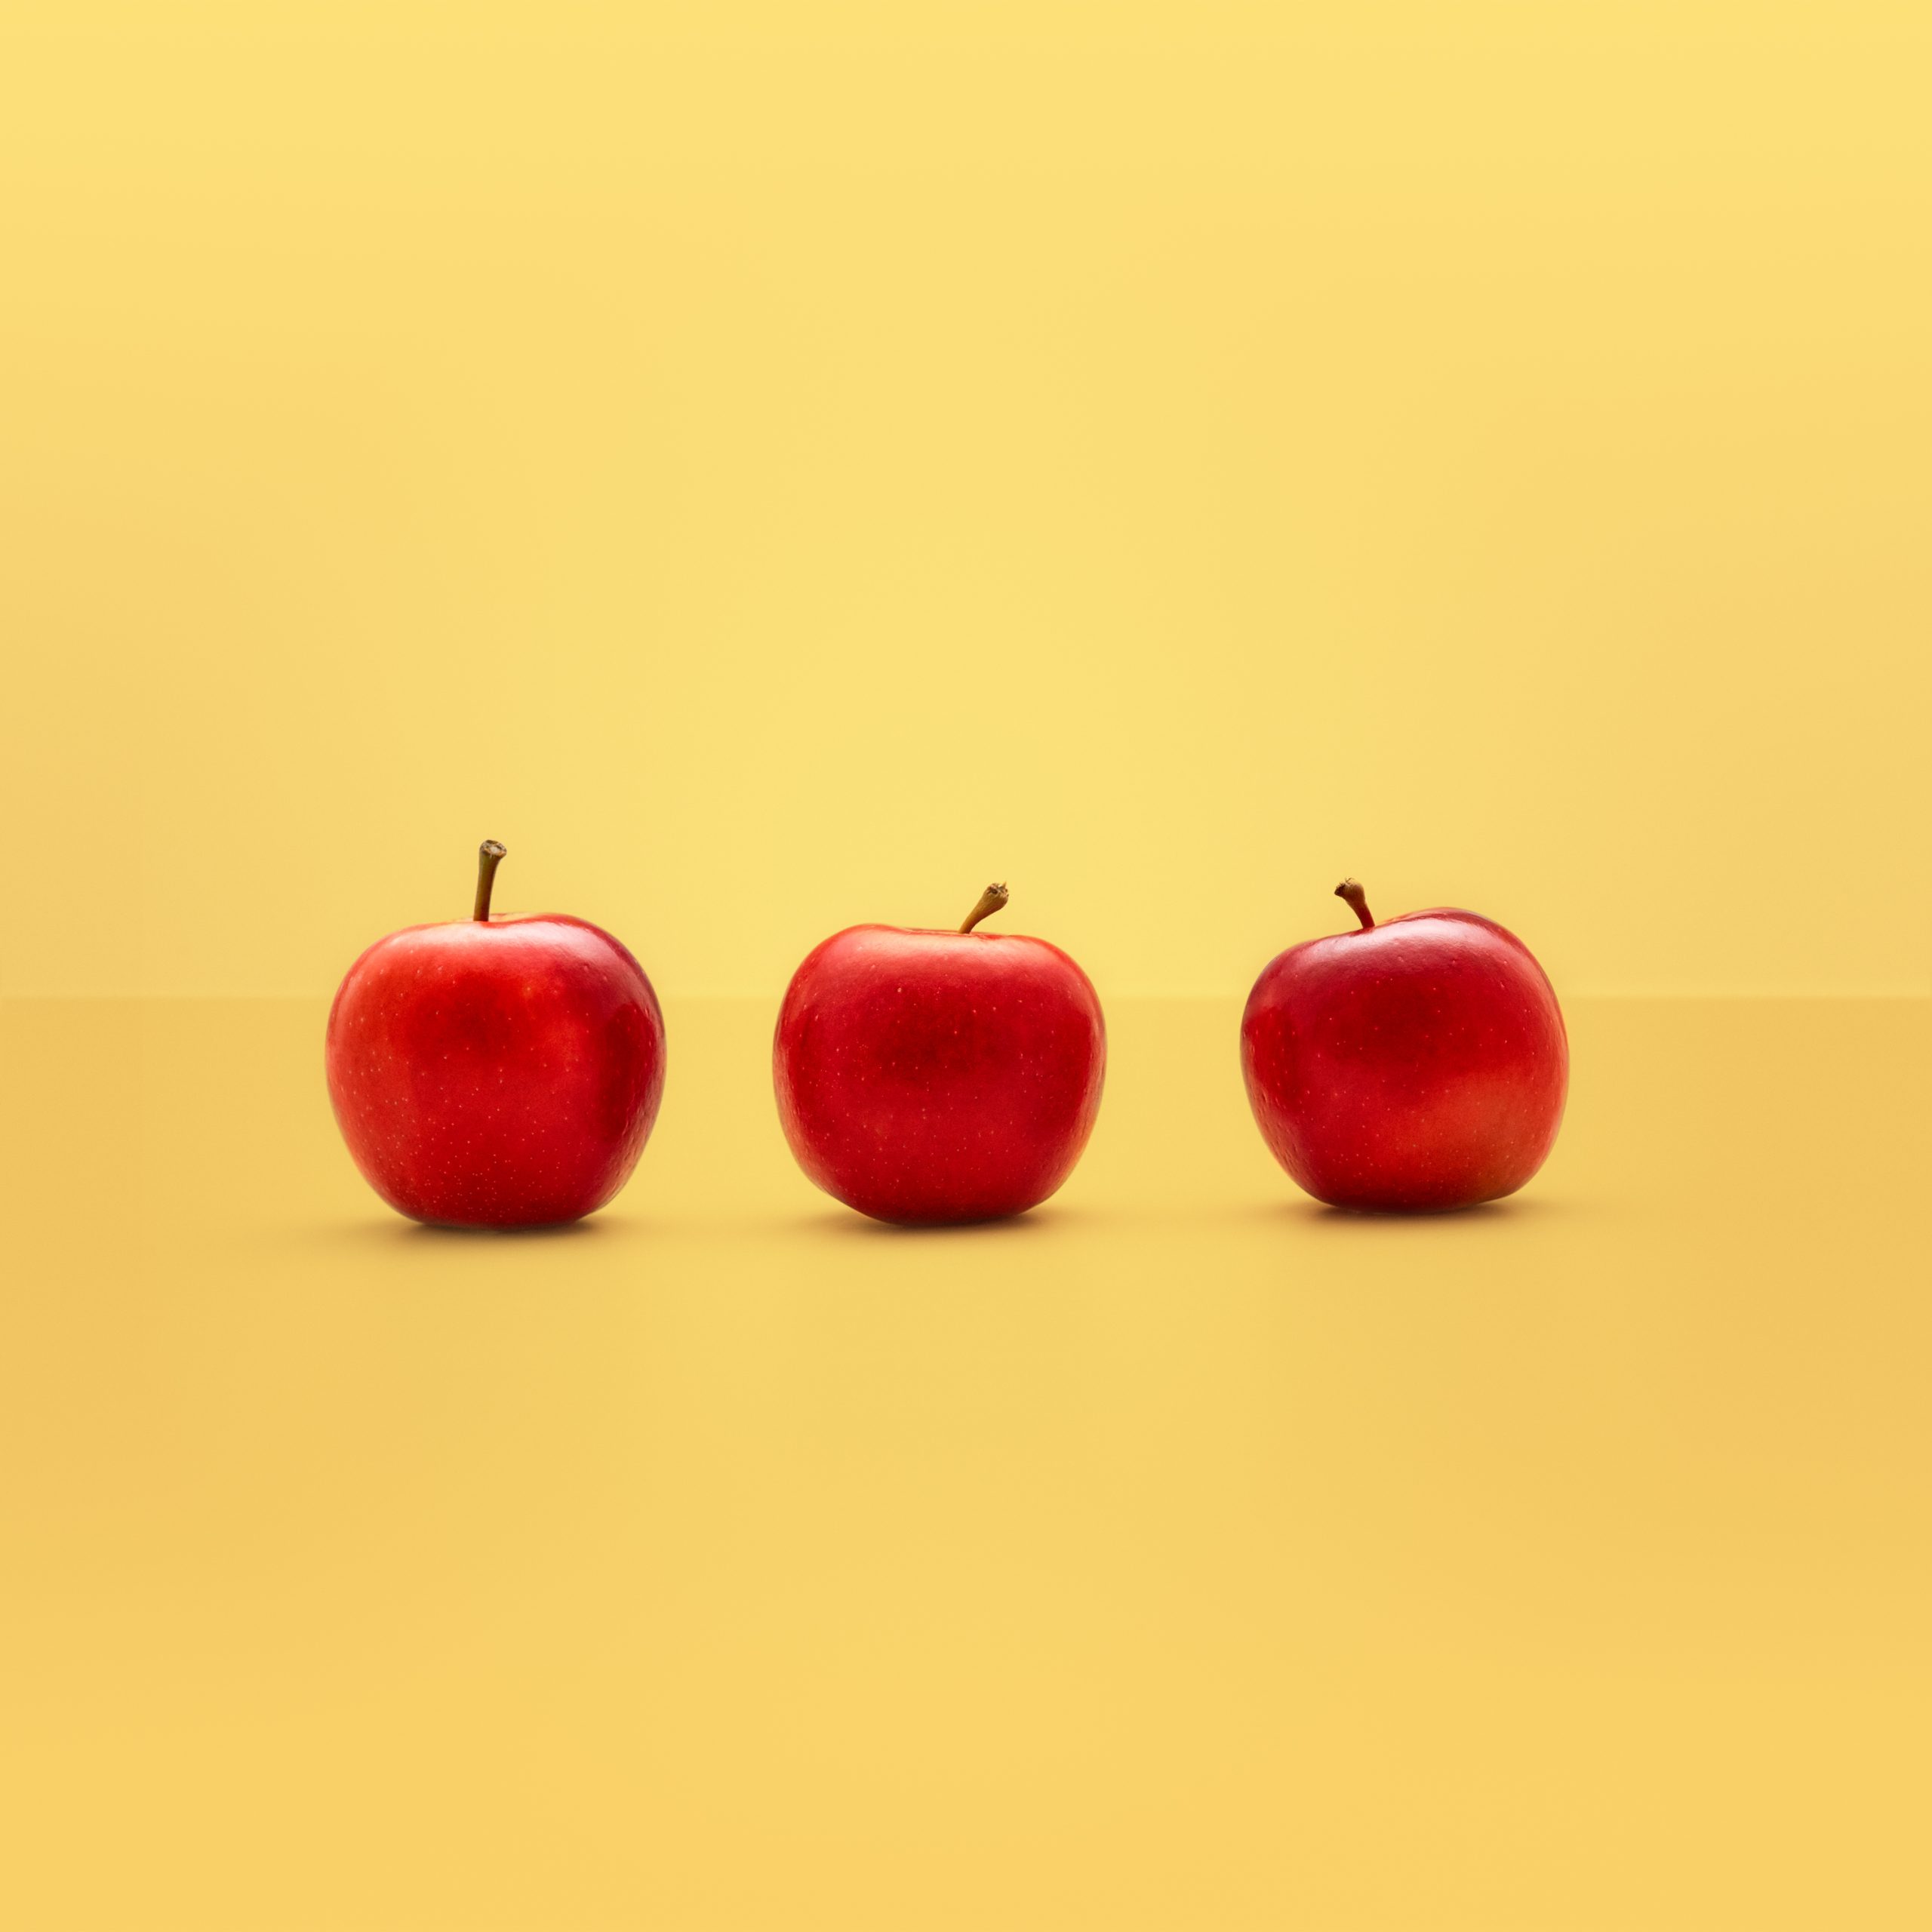 Three Rockit apples sitting in a row